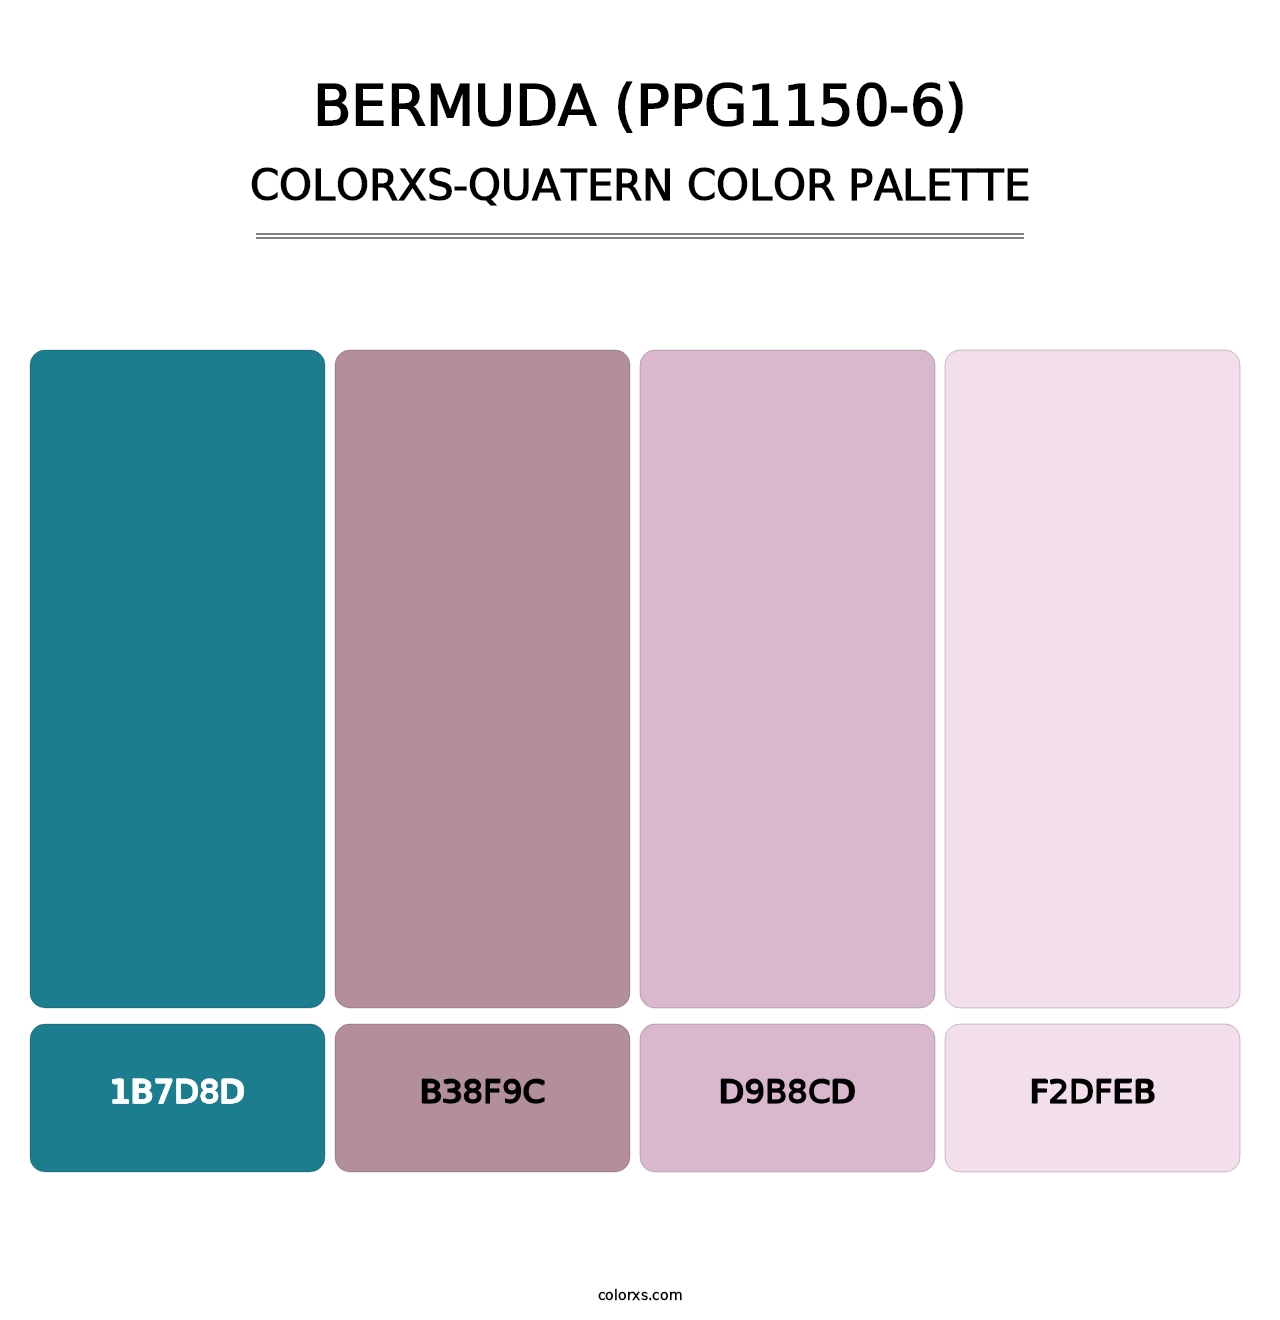 Bermuda (PPG1150-6) - Colorxs Quatern Palette